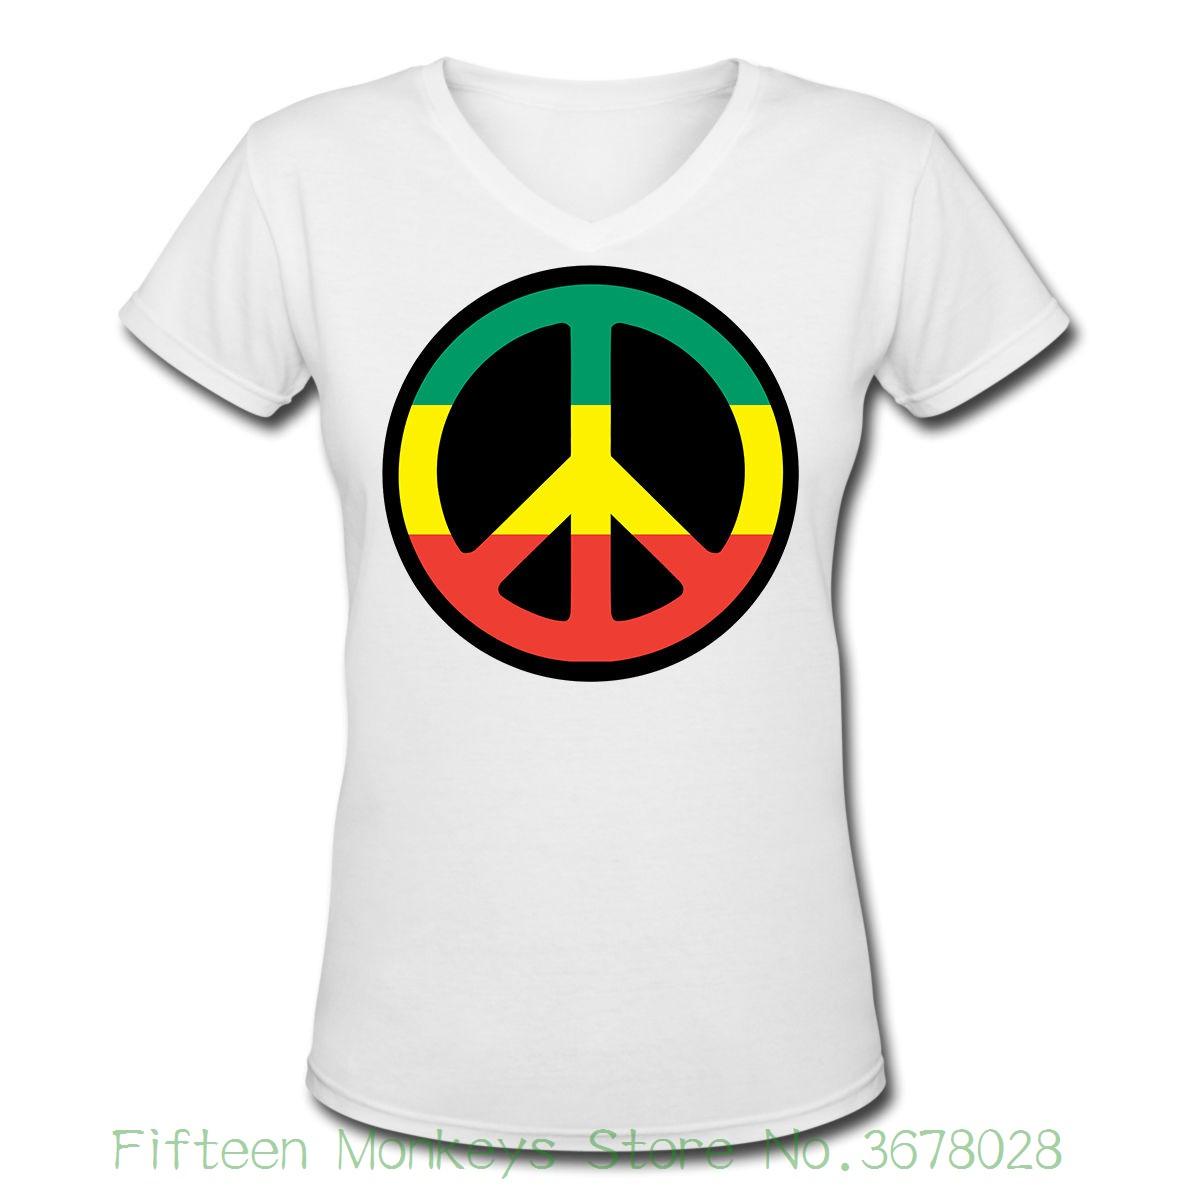 Hippie Peace Sign Logo - Women'S Tee Hippie Peace Sign Stylish Graphic Artwork Top Women'S T